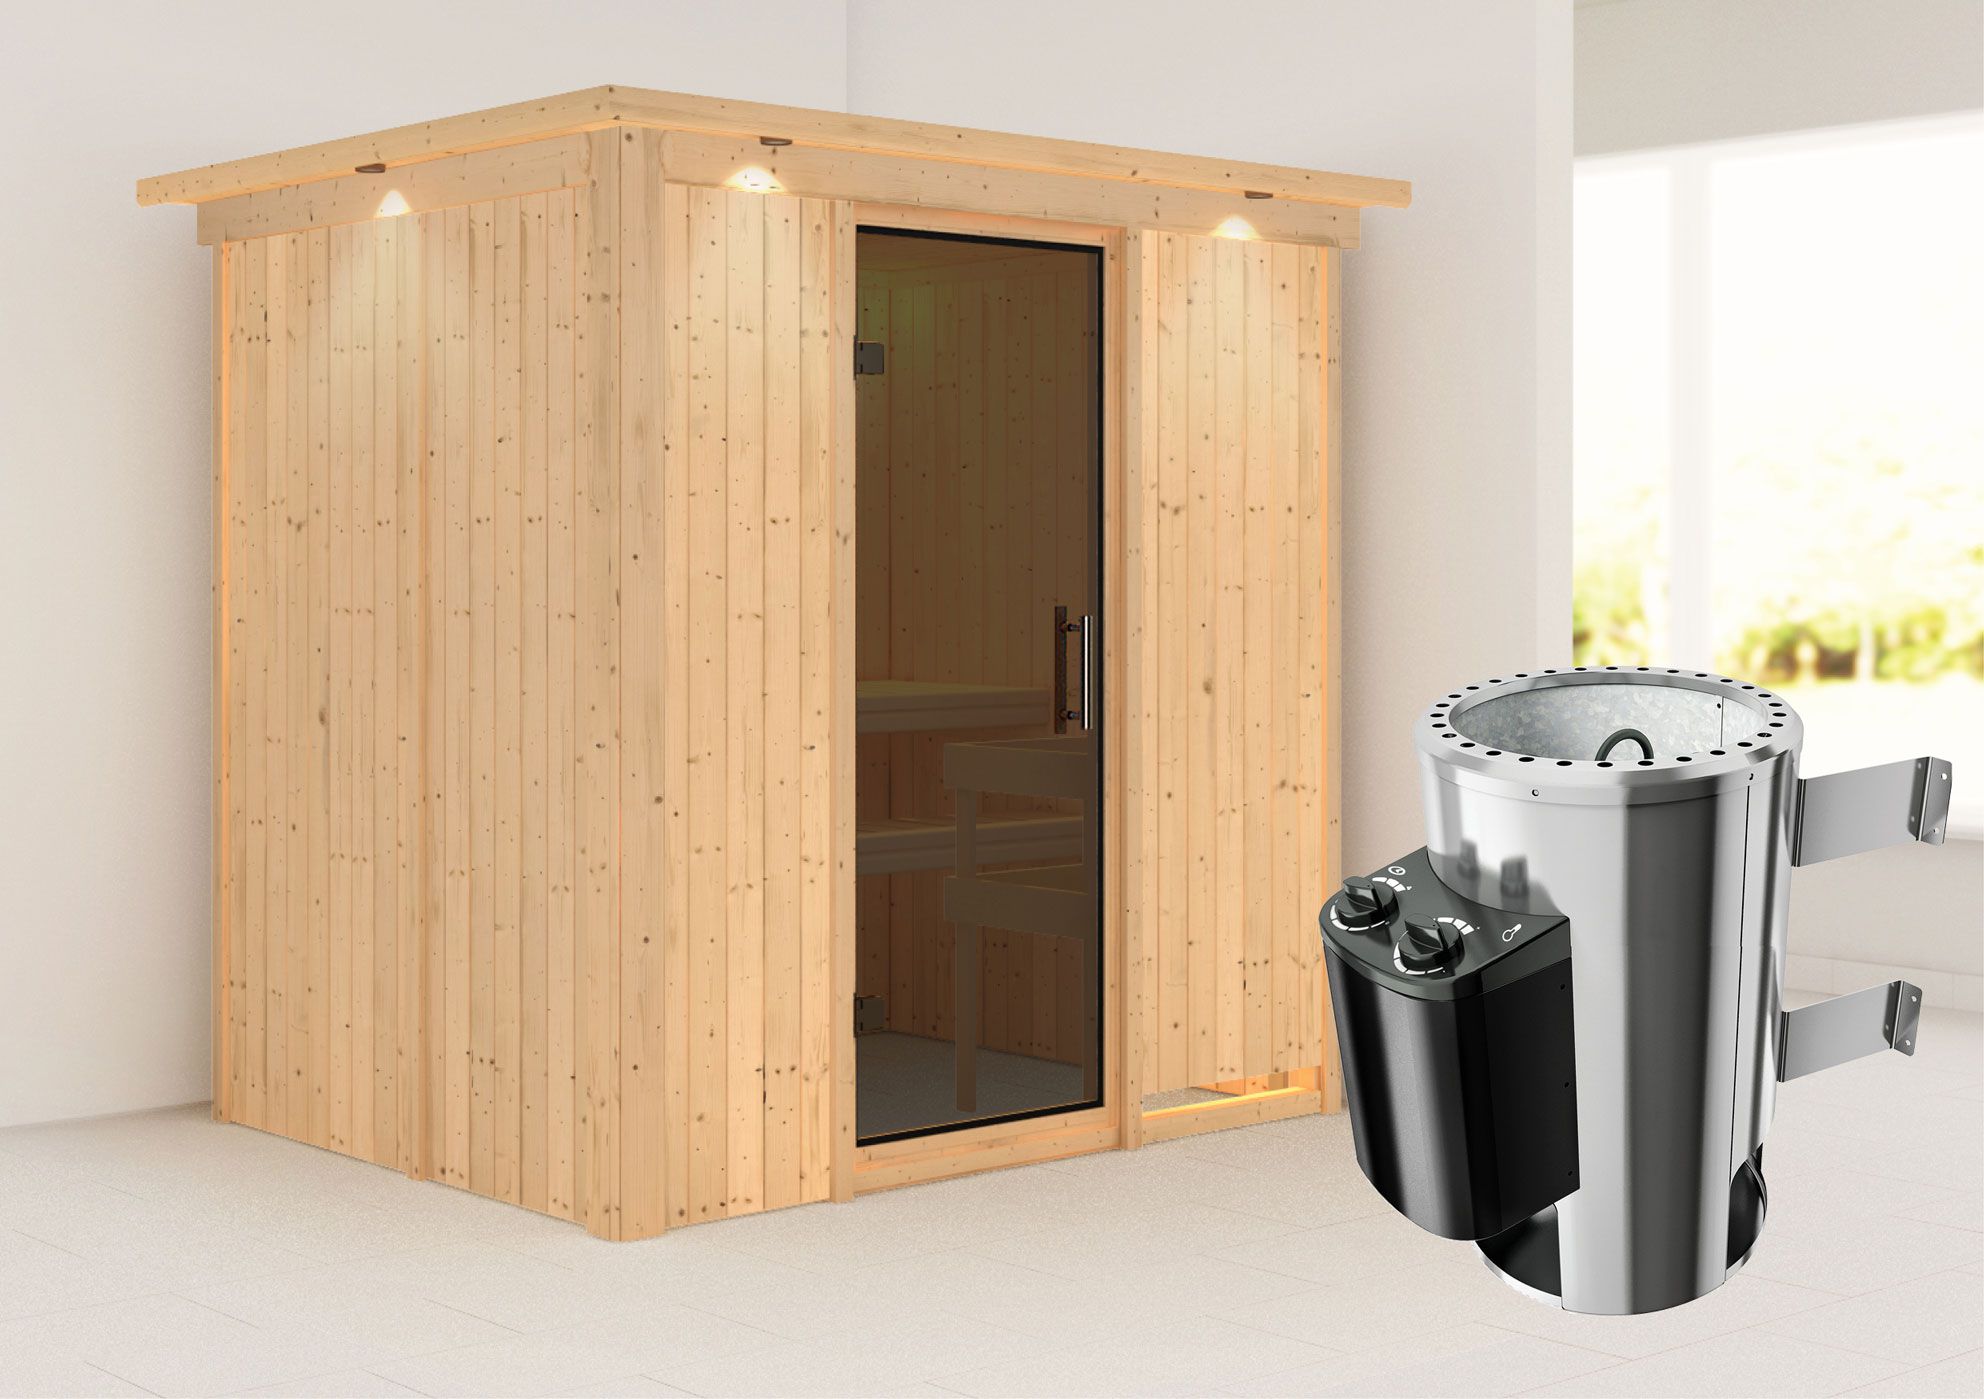 SET-sauna "Jarle" met grafietkleurige deur, rand & 3,6 kW kachel - 210 x 165 x 202 cm (B x D x H)